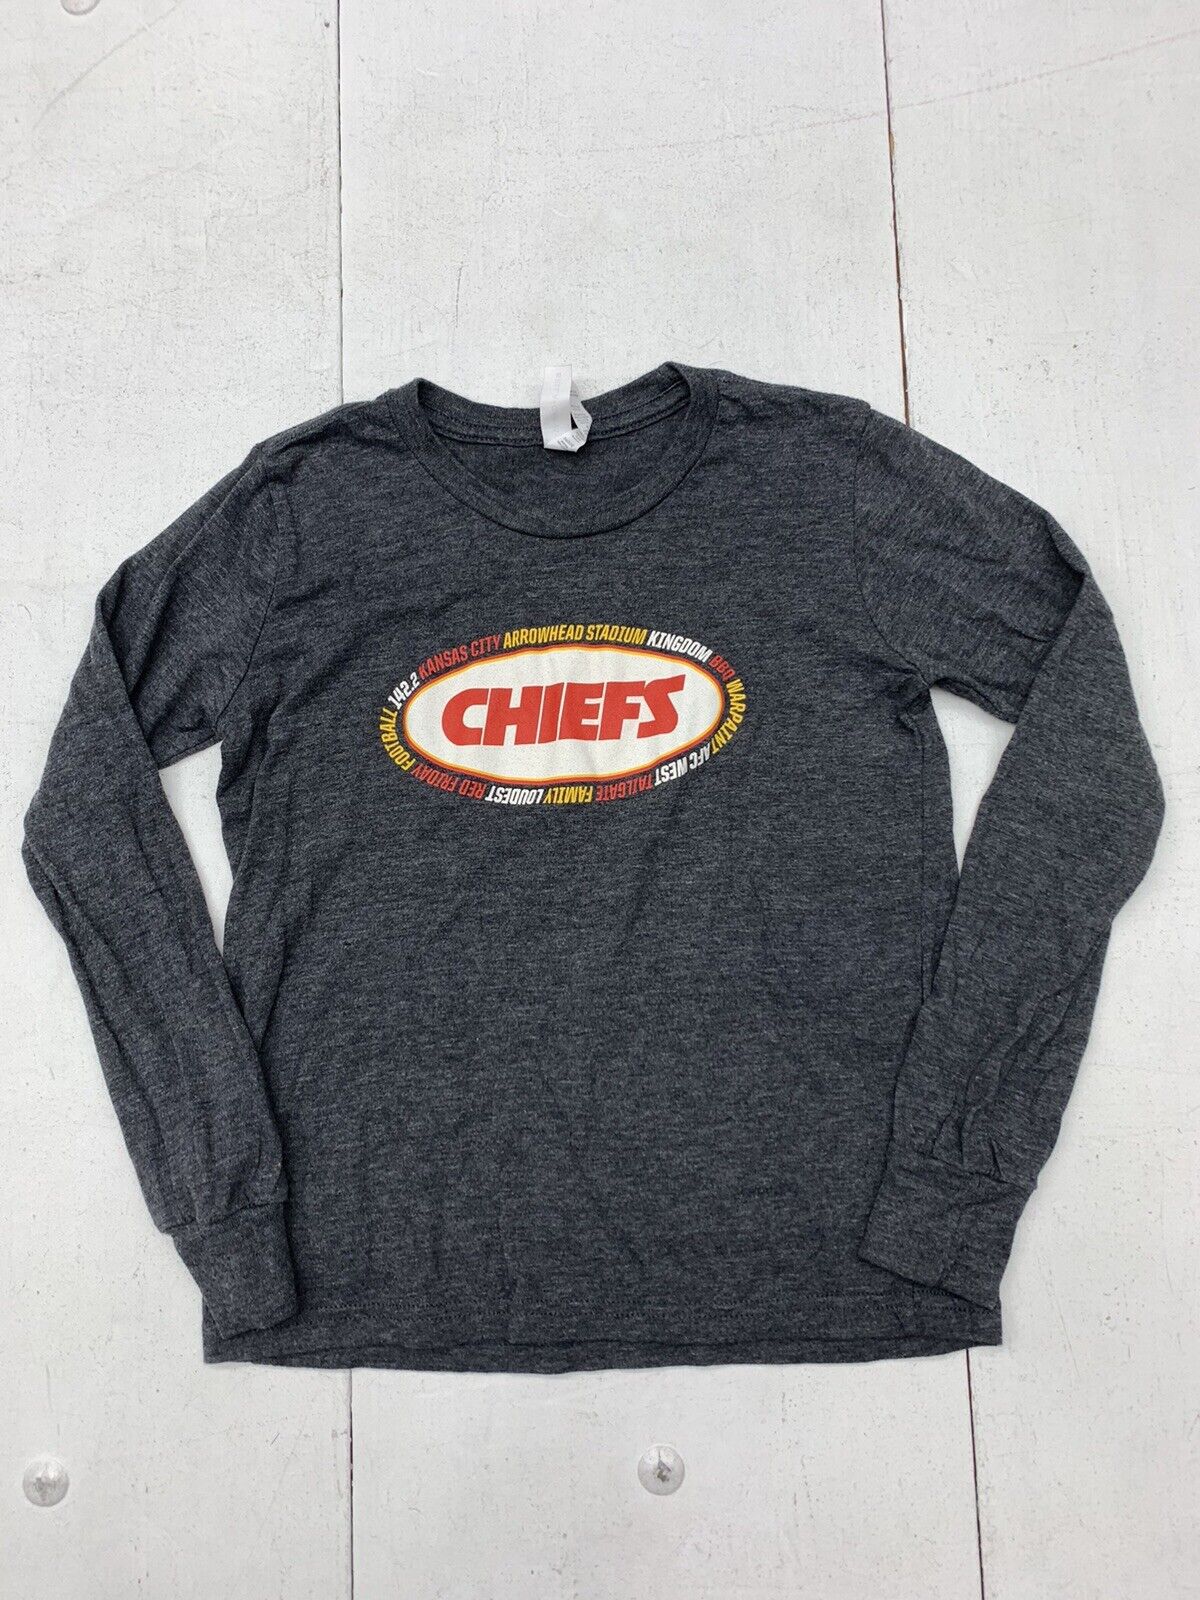 Kansas City Chiefs Kids Dark Grey Graphic Long Sleeve Shirt Size